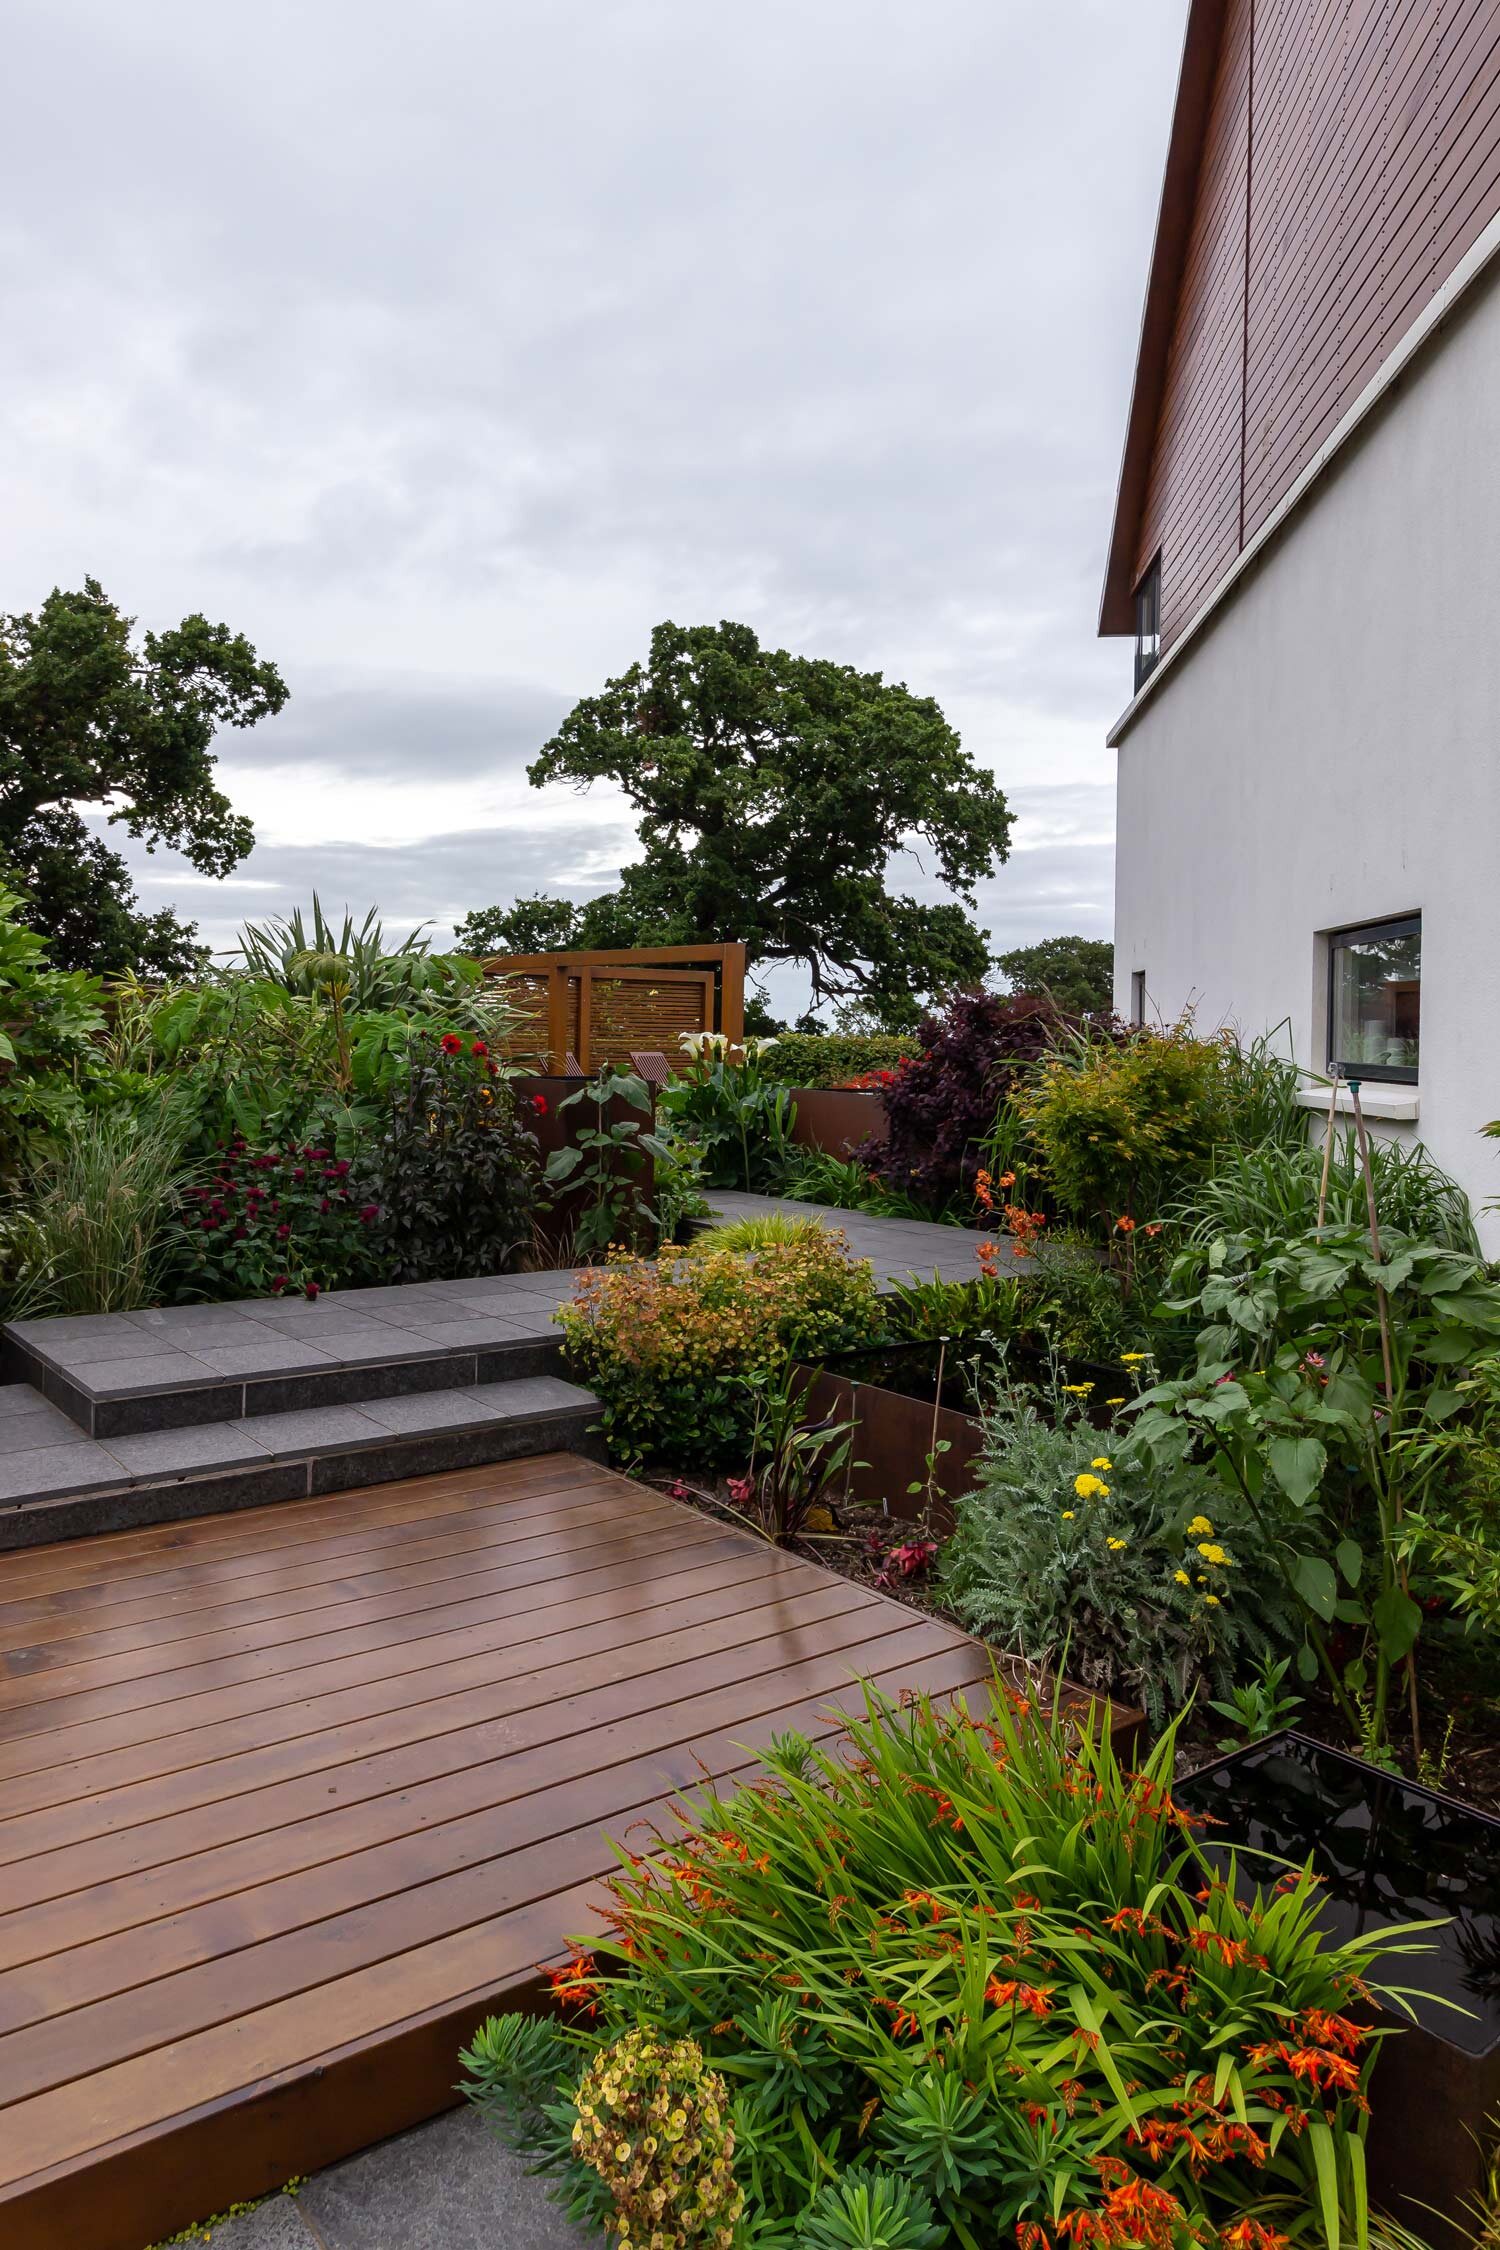 Cedar Deck and Basalt Paving feature in the Edinburgh Garden Design